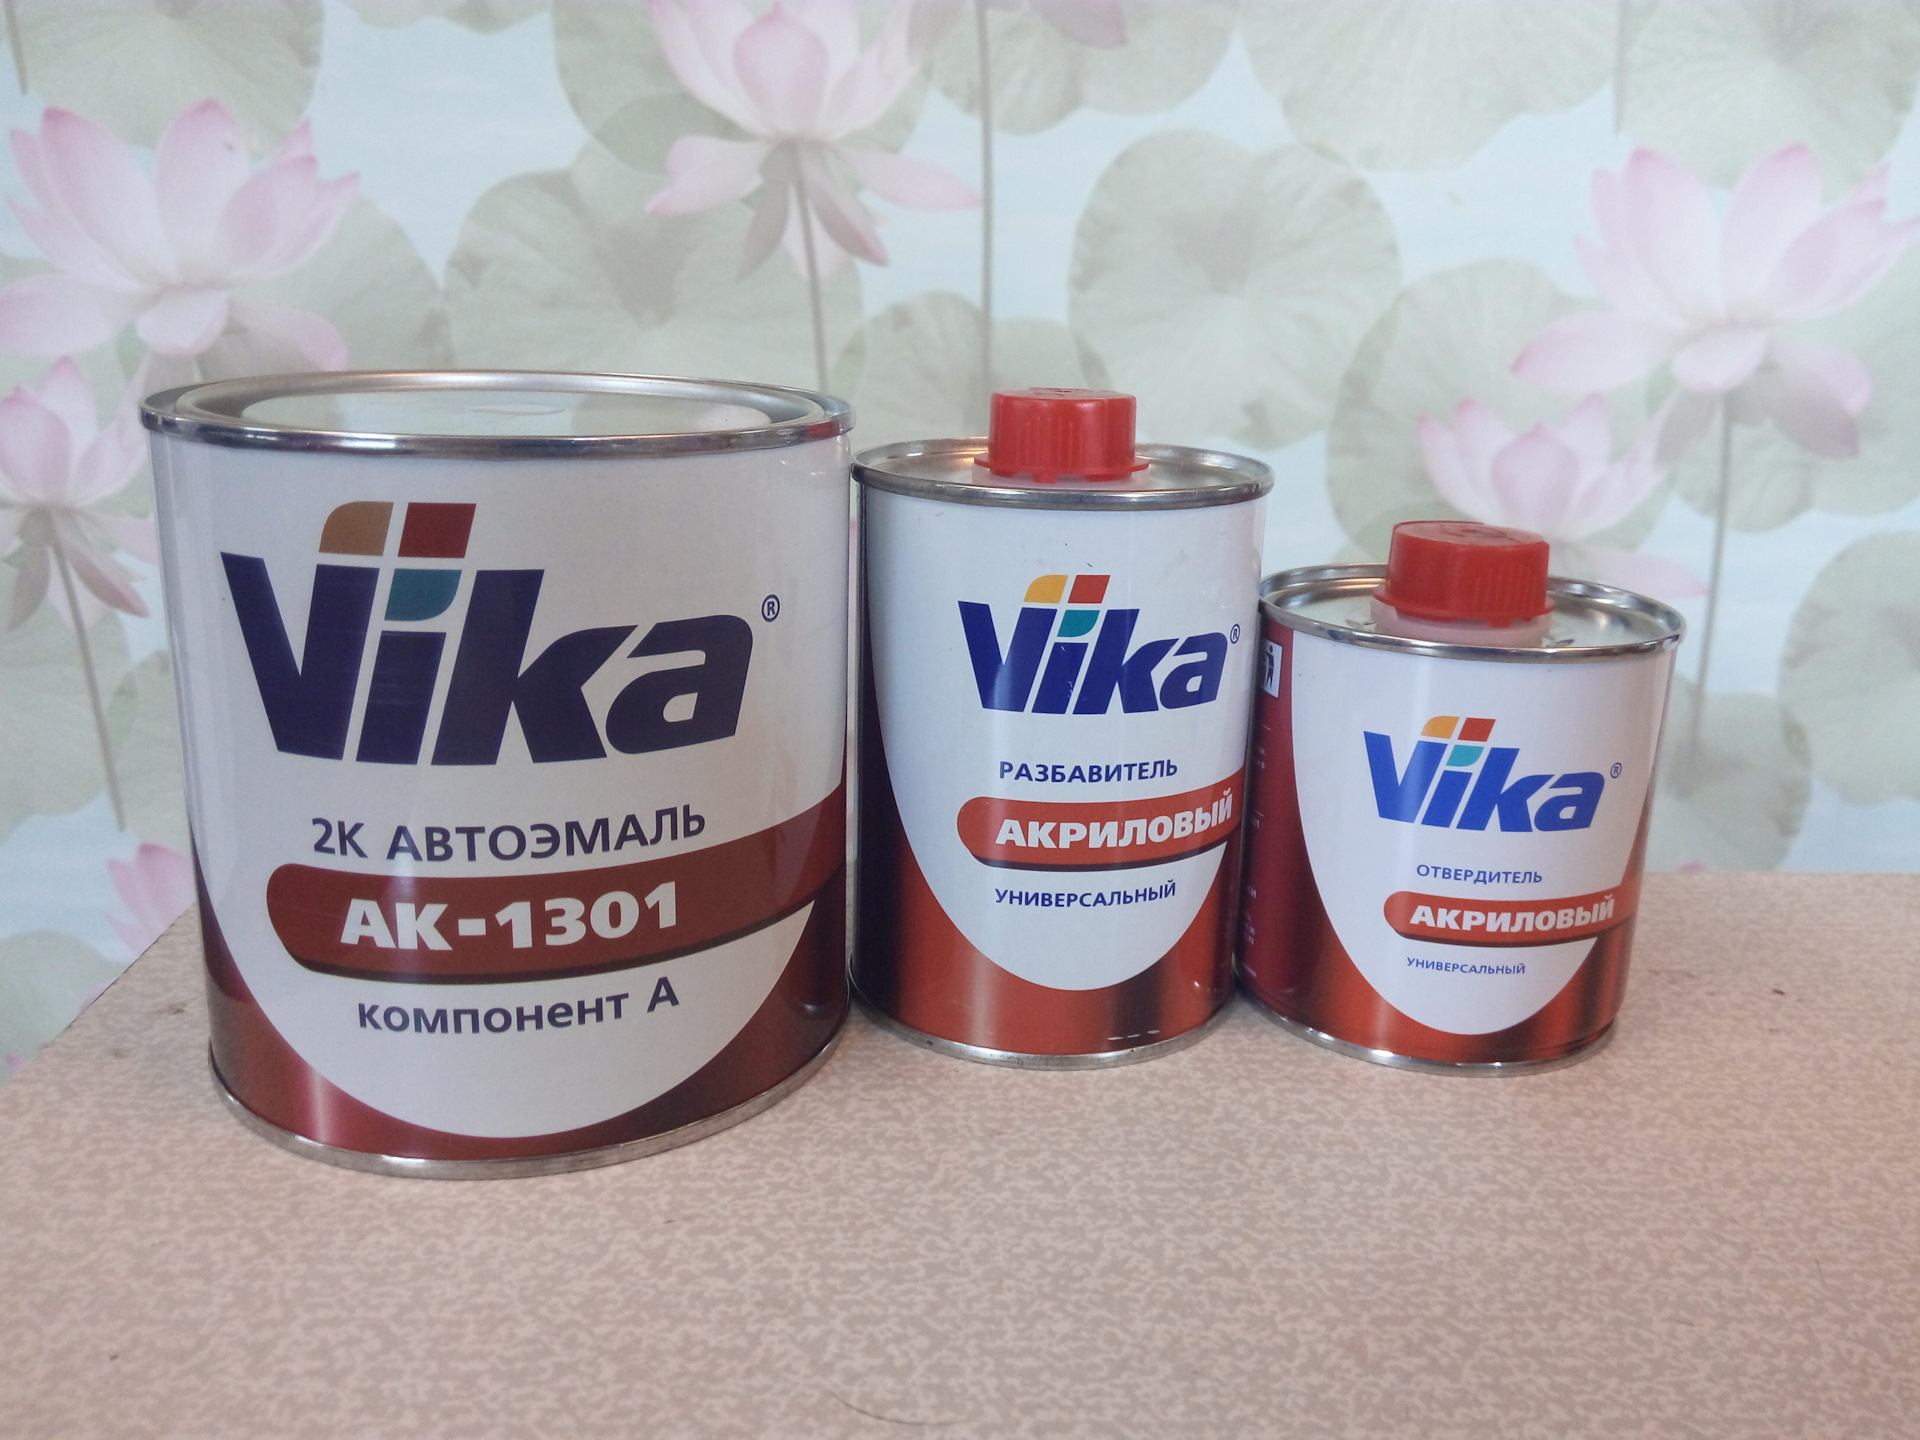 Купить краску вика. 2к автоэмаль АК-1301 Vika. Vika (Вика), акриловая эмаль АК-1301. Эмаль акриловая 1301 Vika. Краска Вика АК 1301 акриловая.